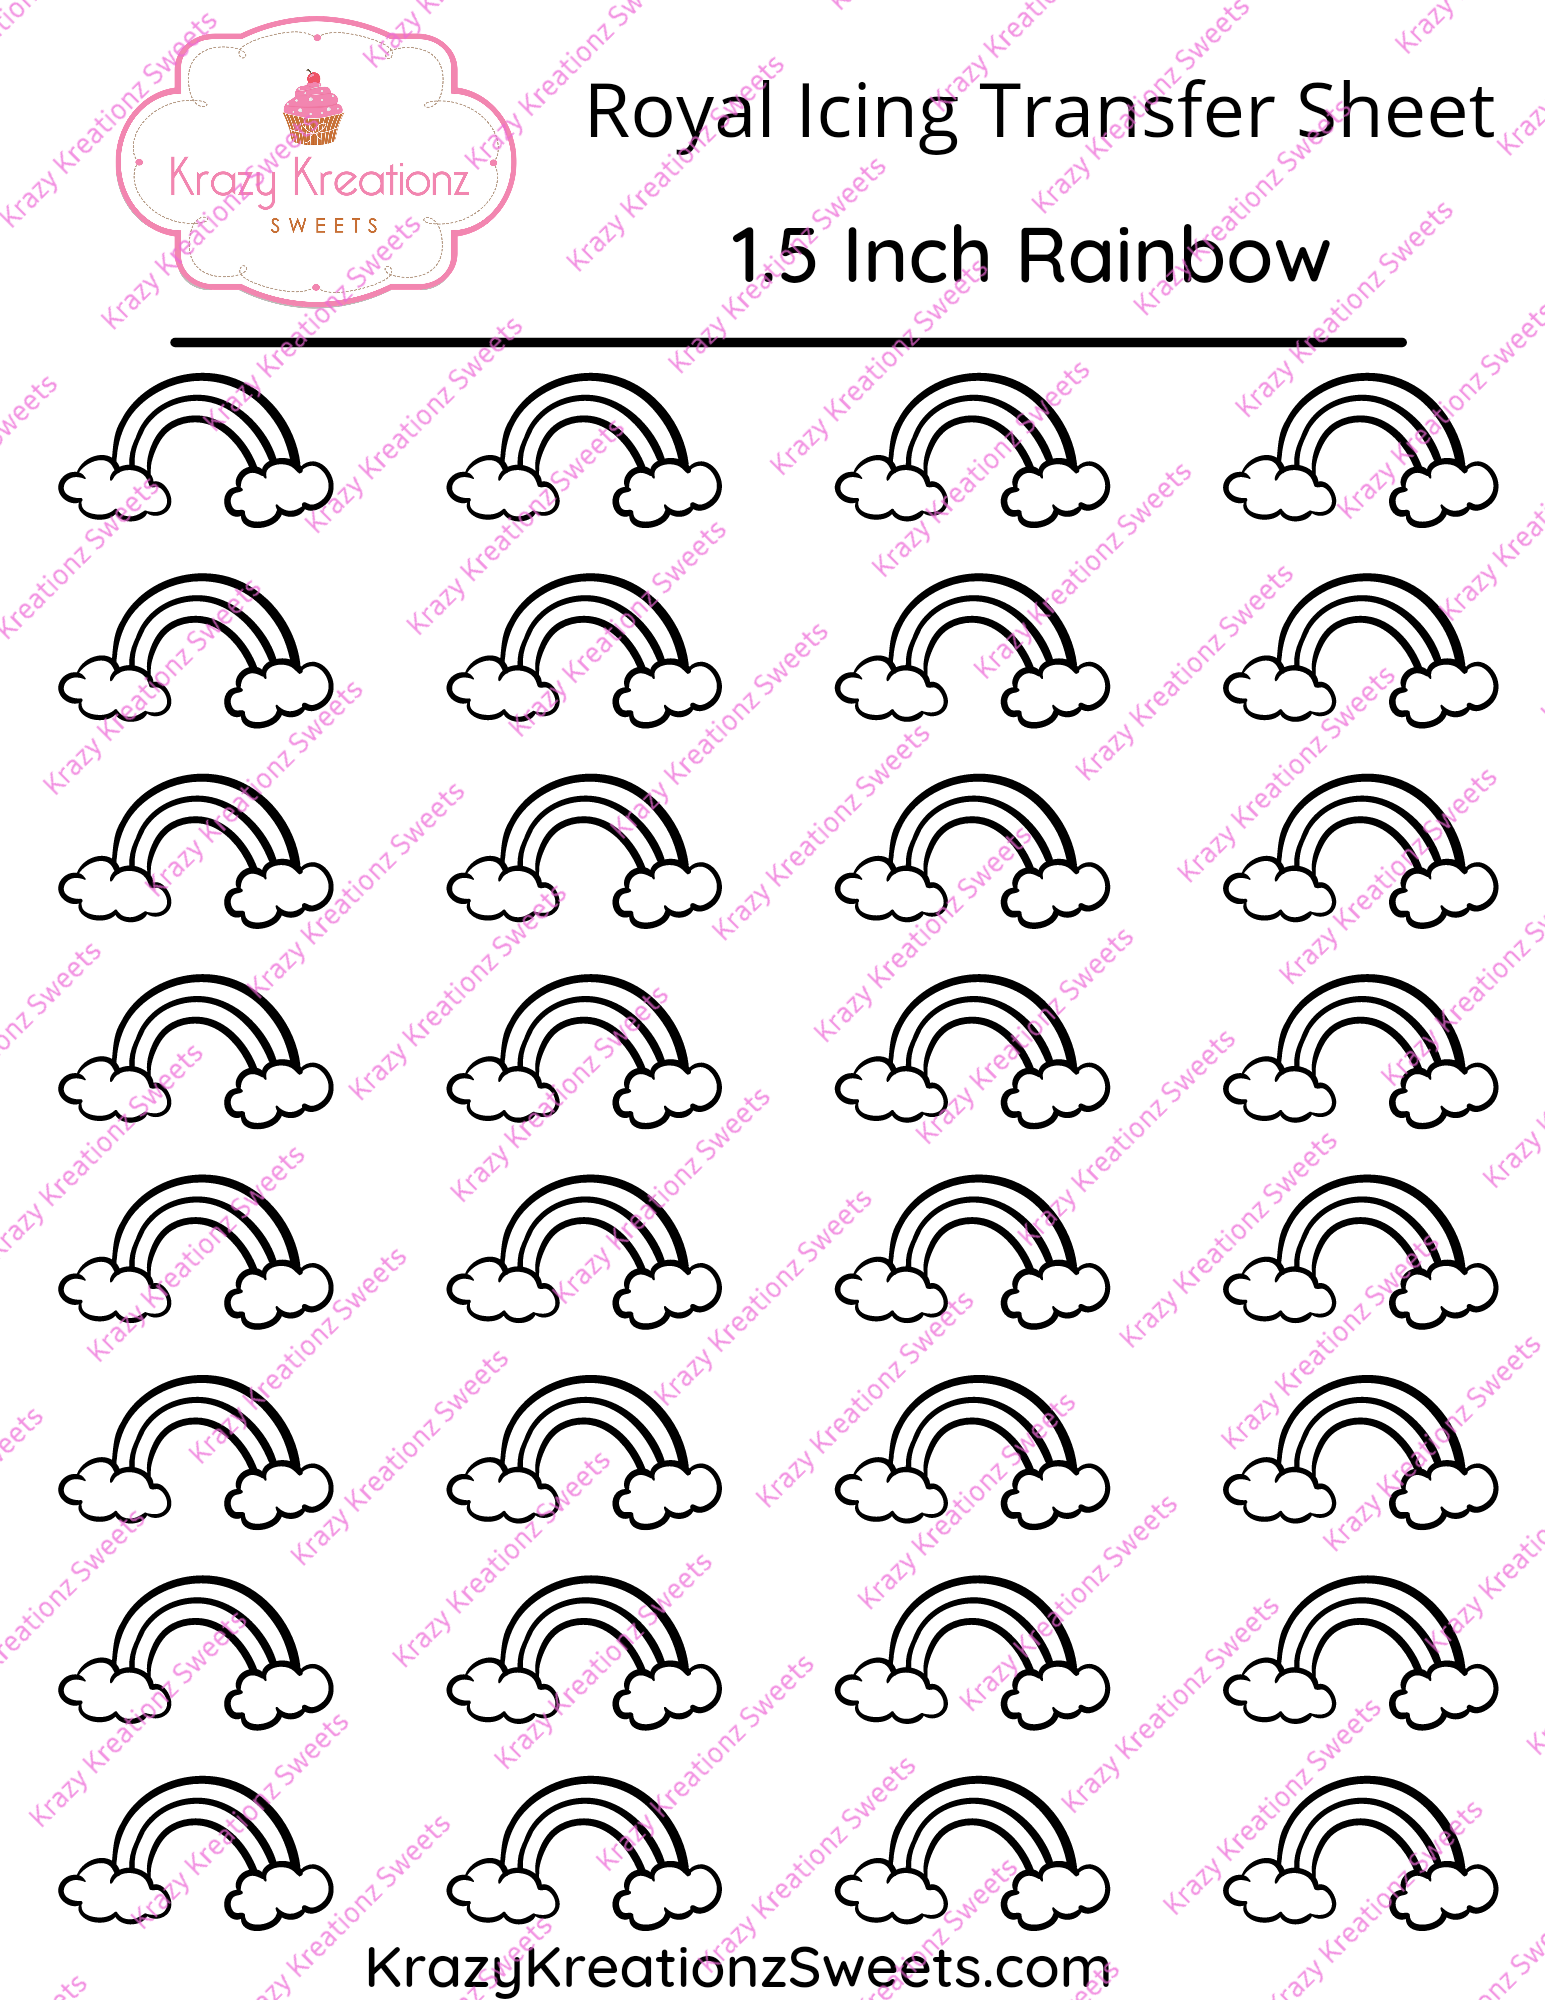 1.5 inch Rainbow Royal Icing Transfer Sheet